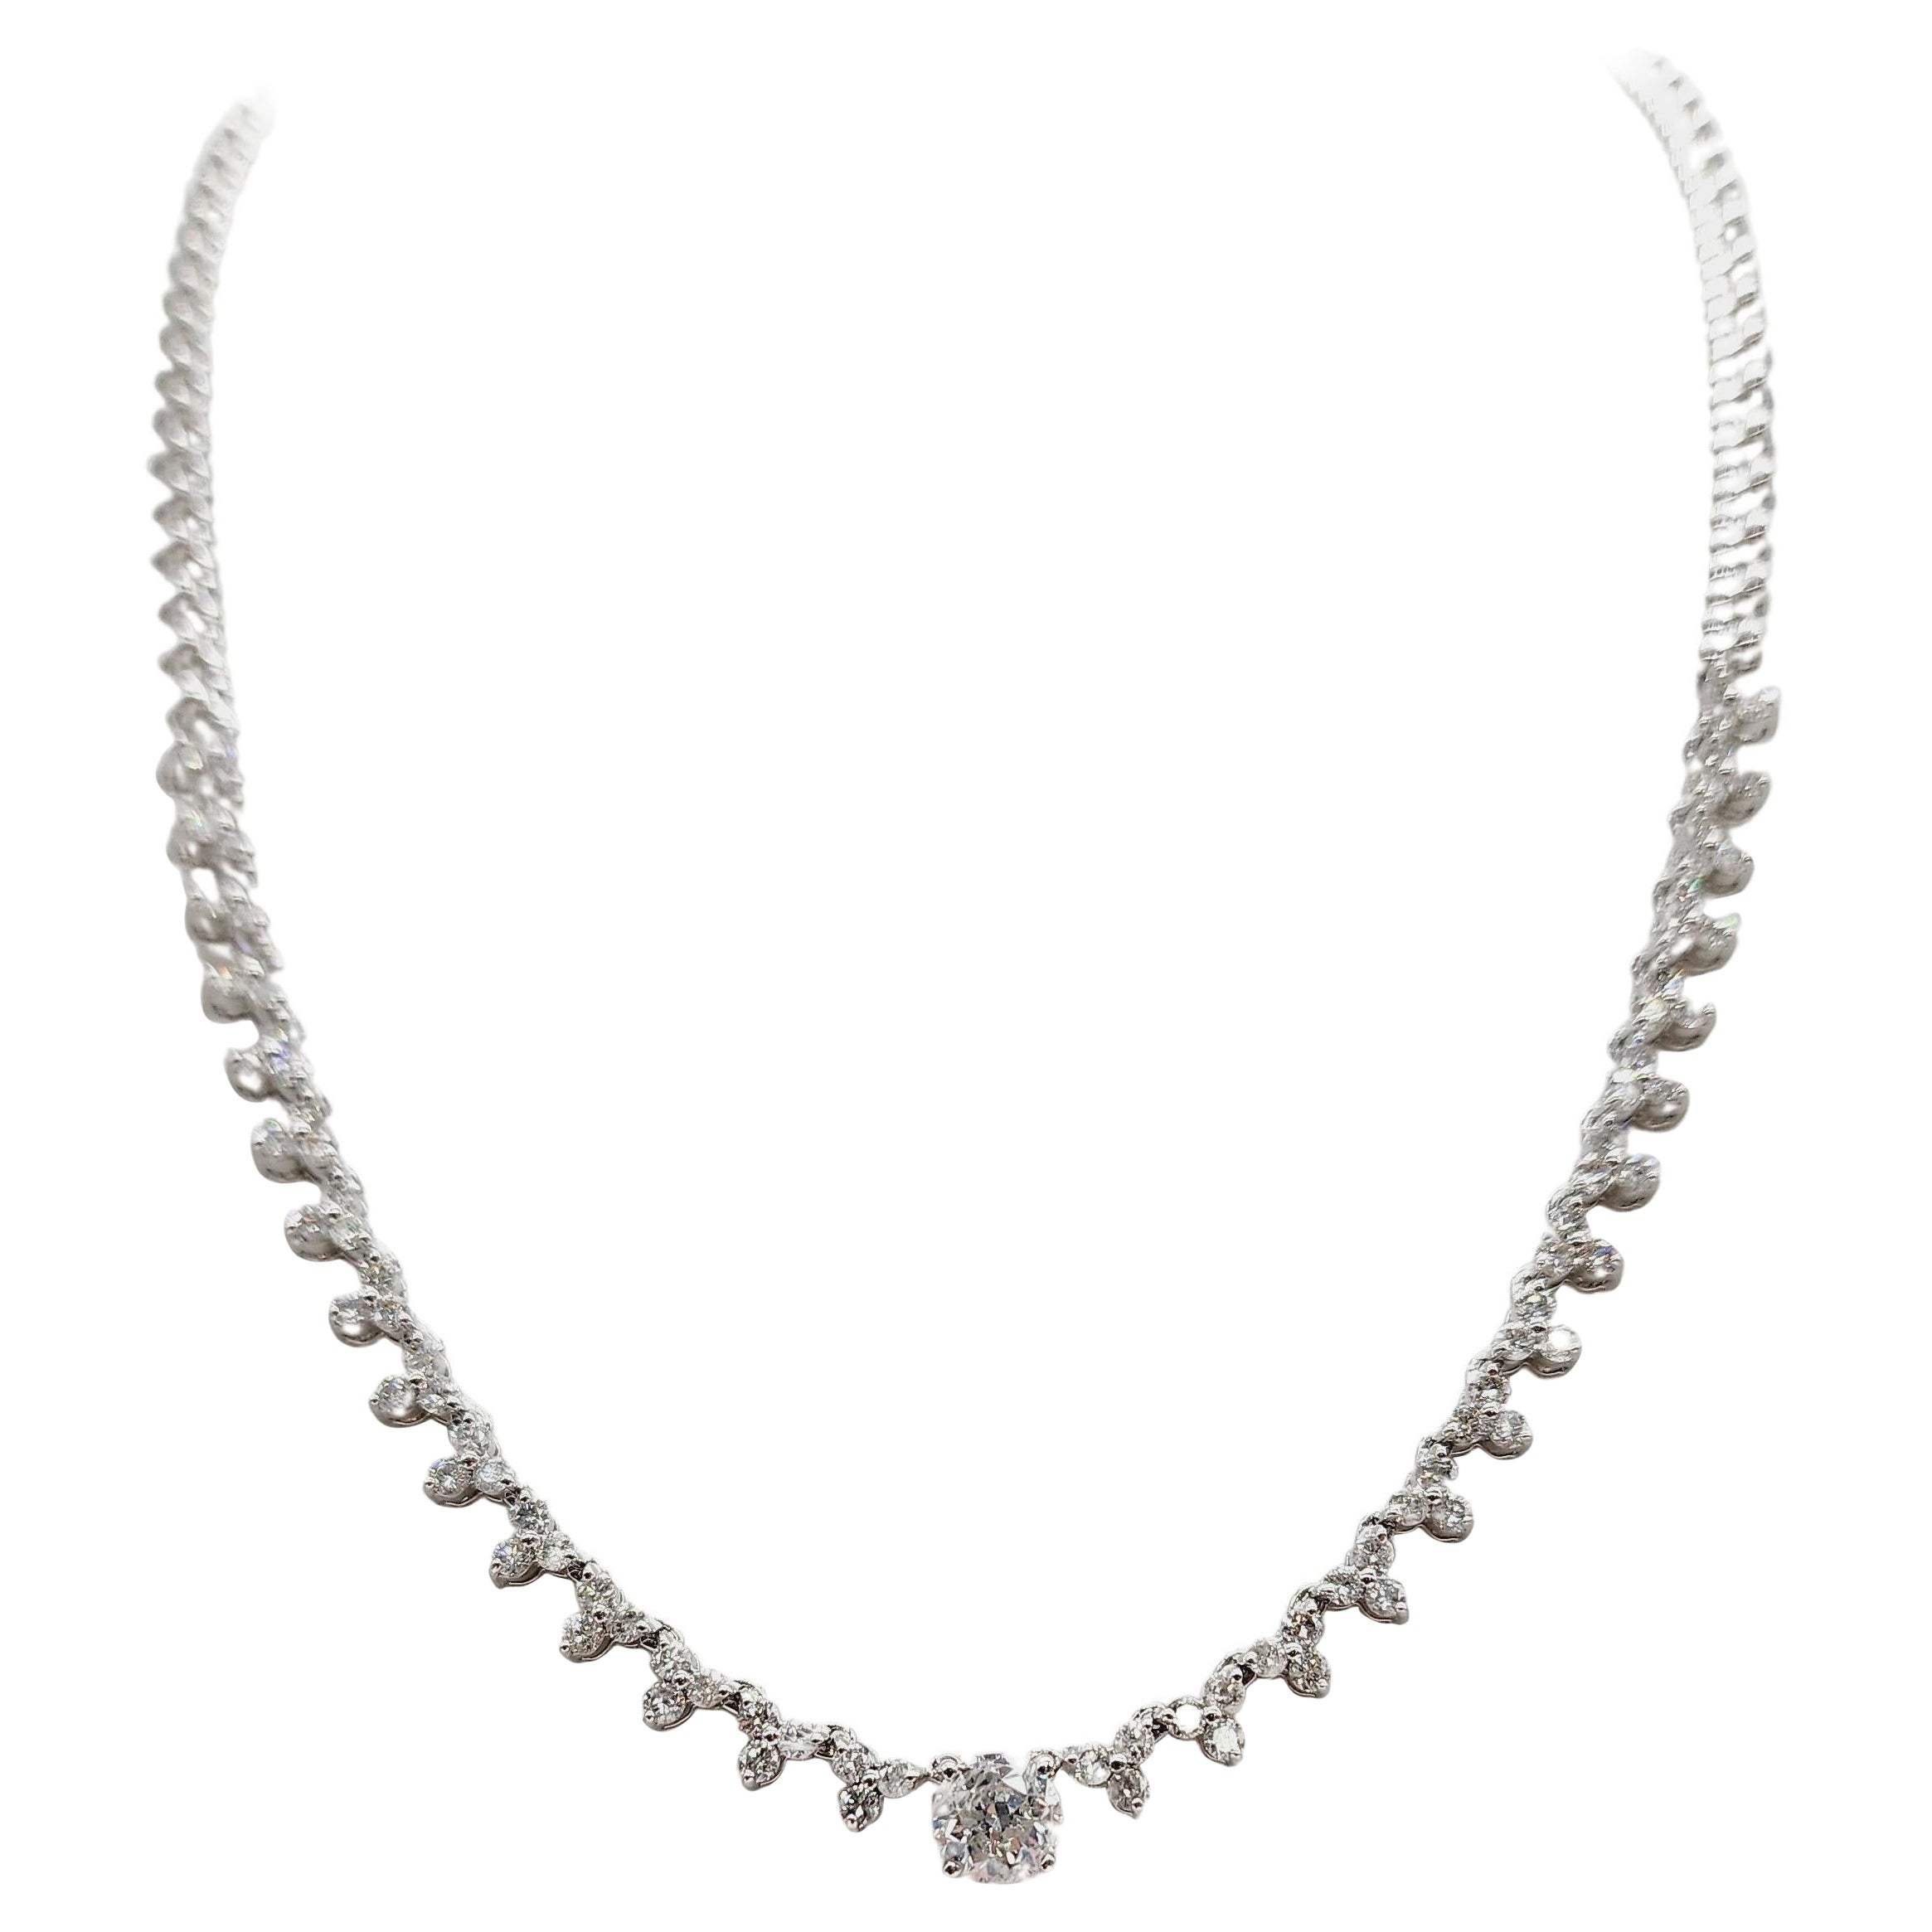 3.81 Carats Diamond Flower Shape White Gold Necklace 14 Karat 16''